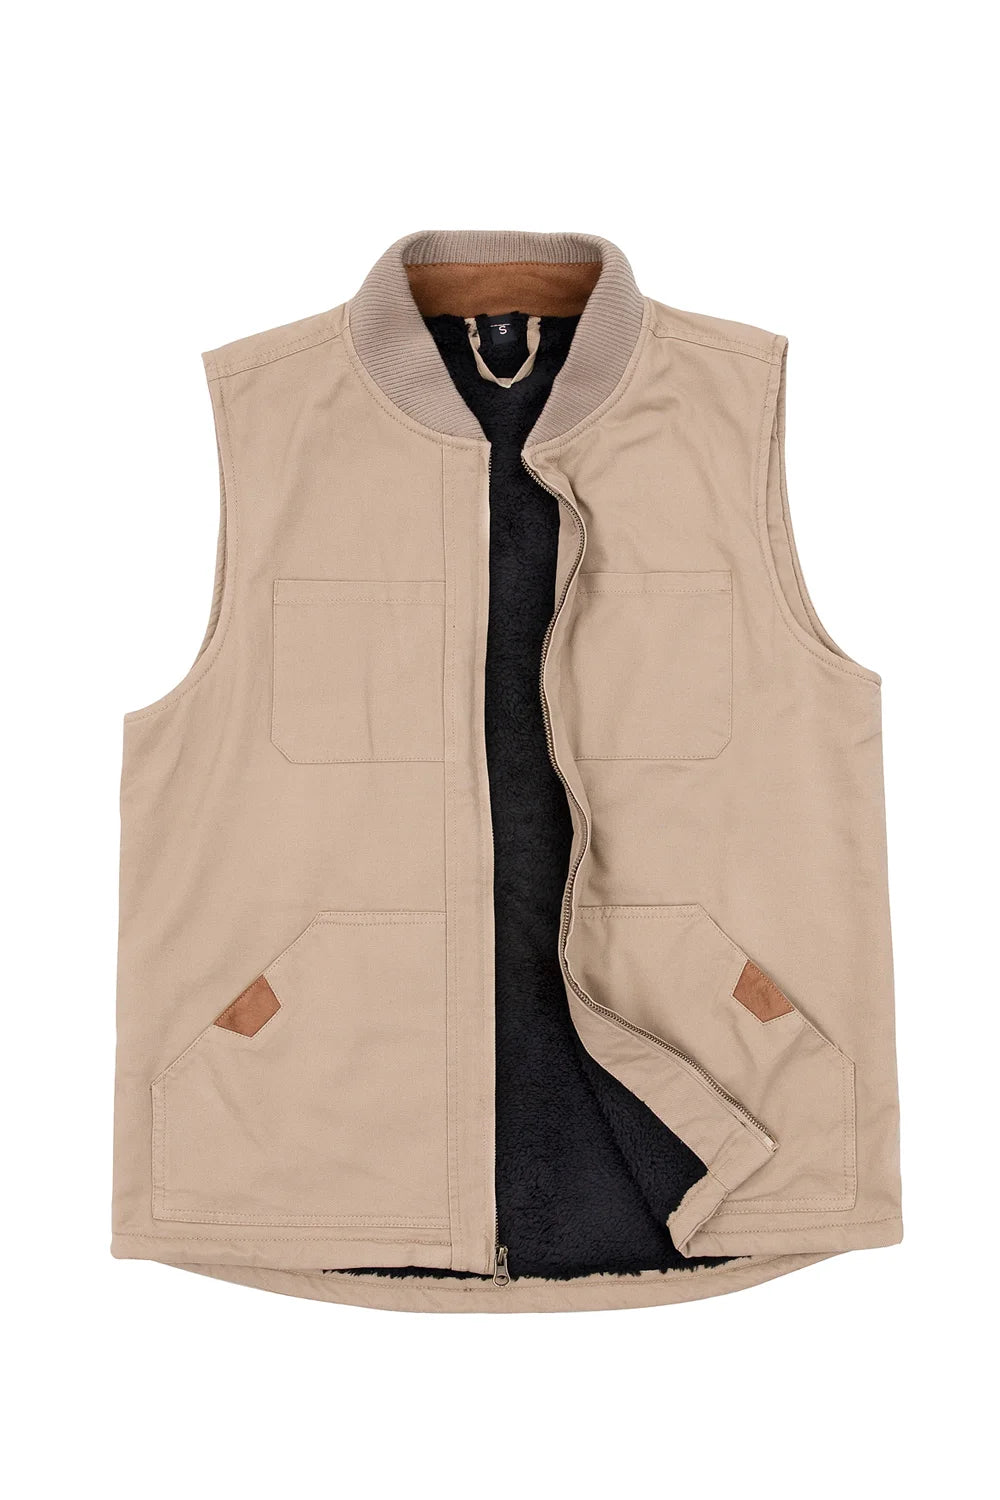 Men's Work Utility Canvas Vest, Sherpa Lined, Dark Khaki / XL